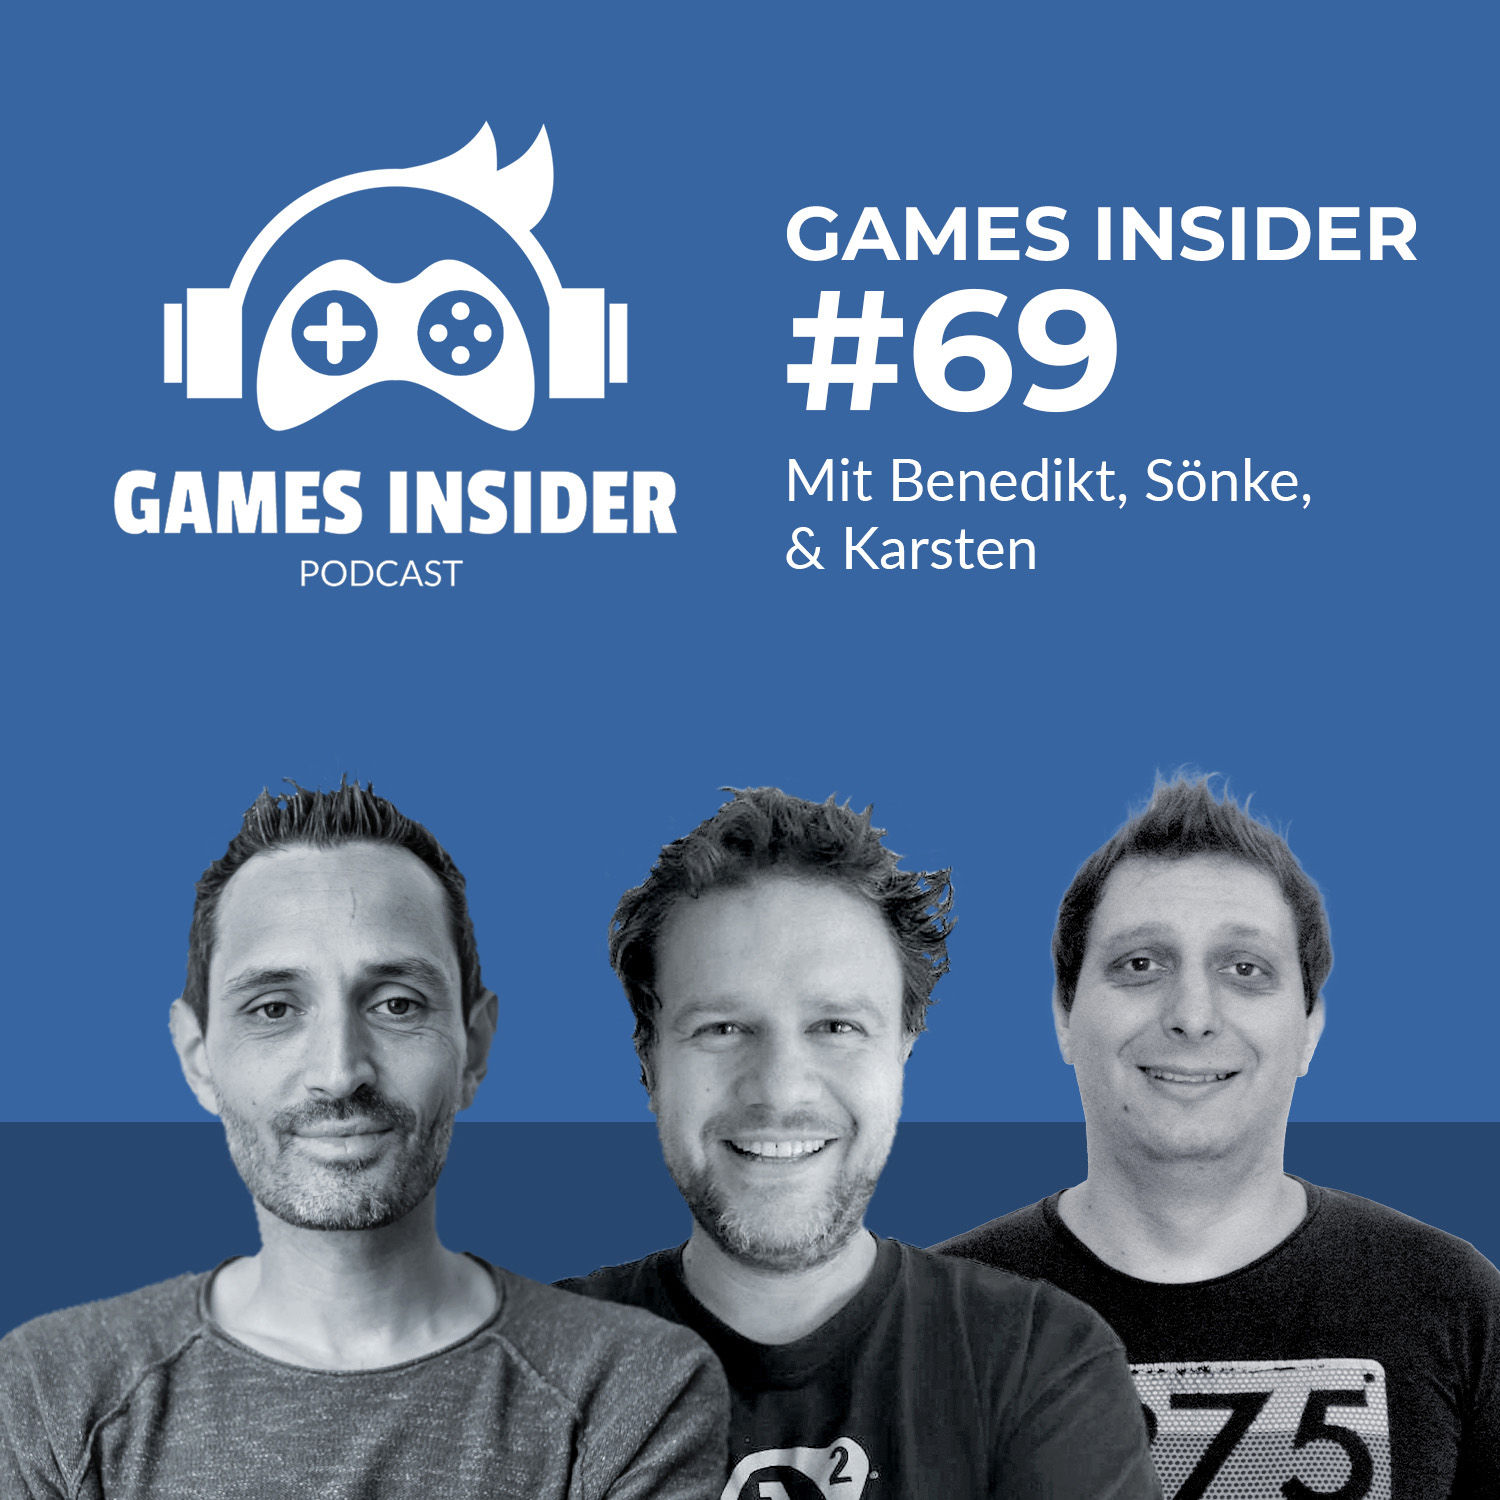 Games Insider - Podcast